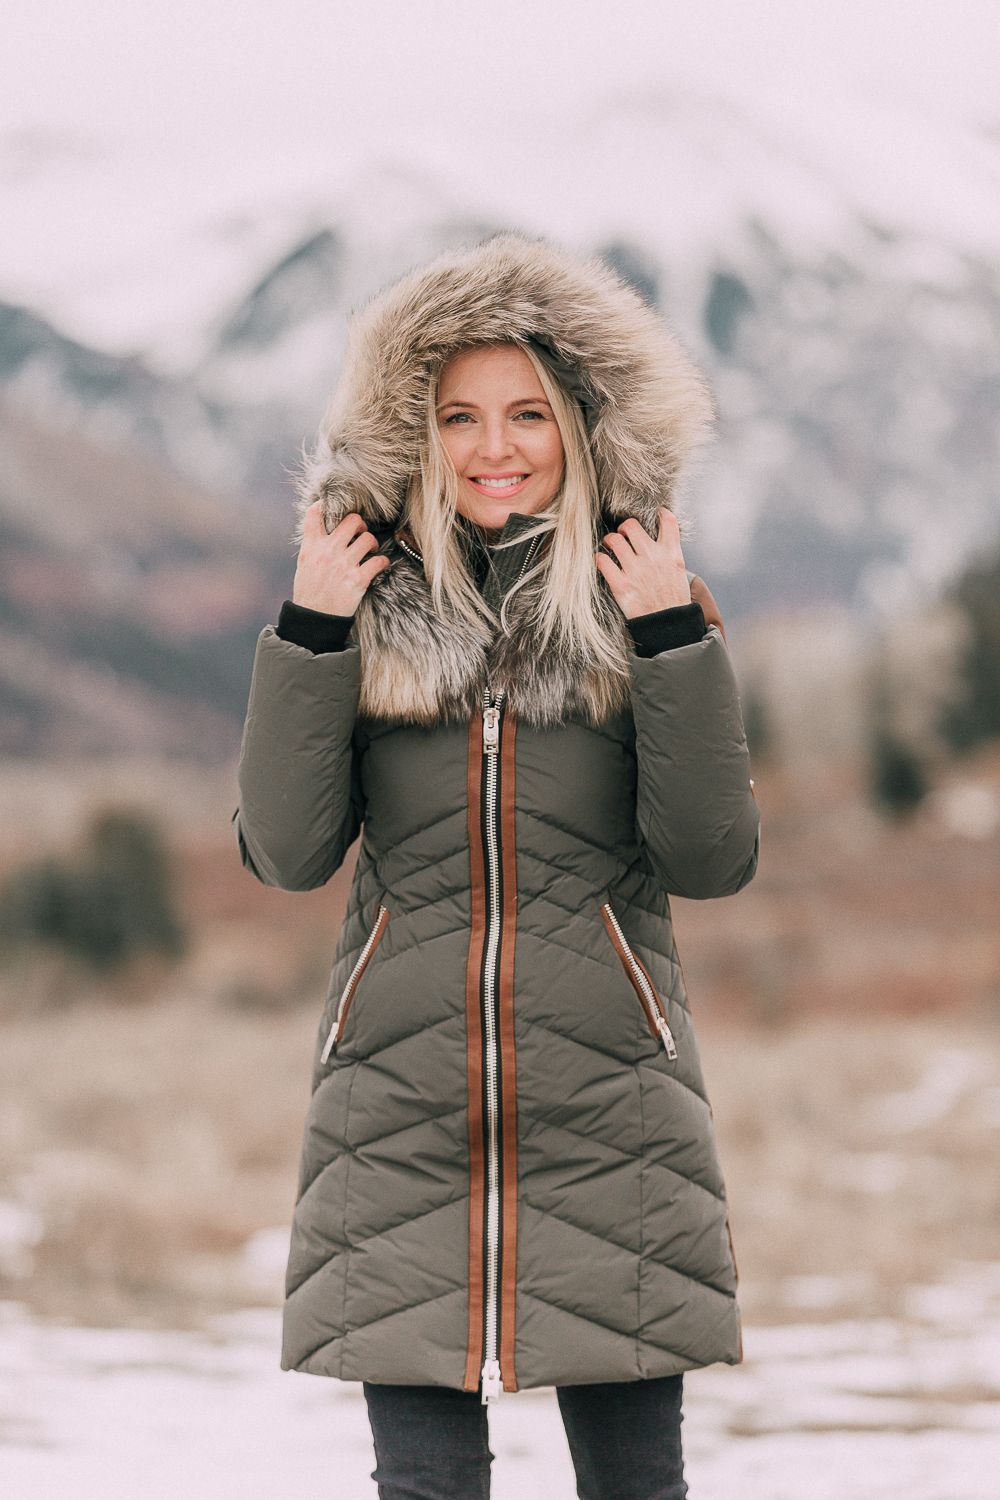 Best Winter Coats Guaranteed to Keep You Warm! | Busbee Style - Best Winter Coats Guaranteed to Keep You Warm! | Busbee Style -   18 style Winter coat ideas